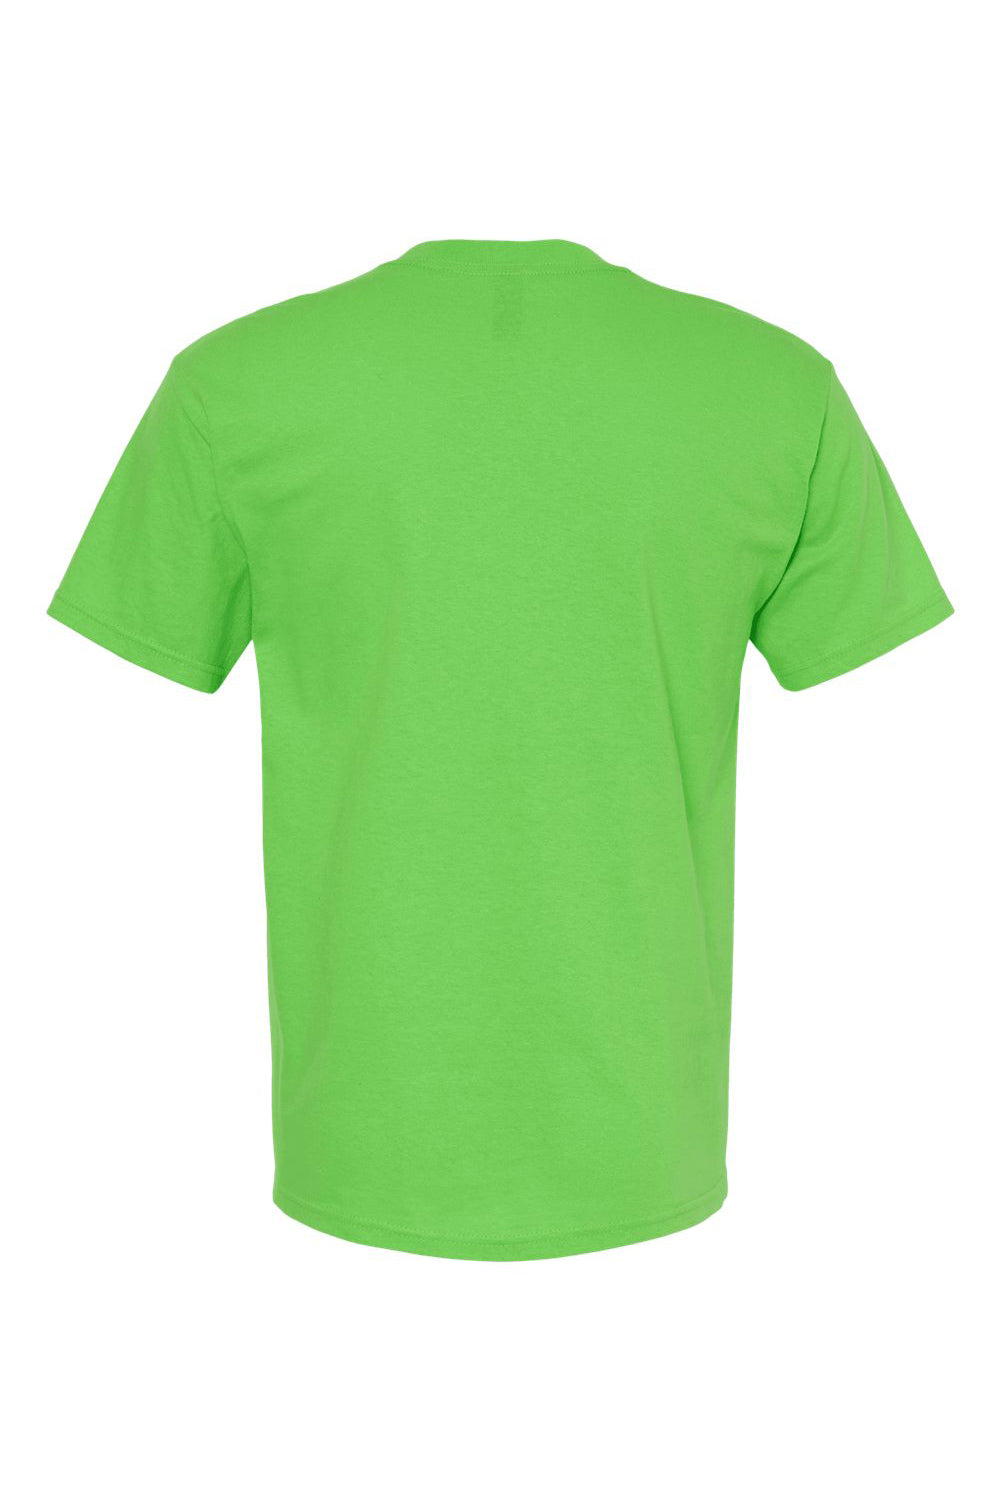 M&O 4800 Mens Gold Soft Touch Short Sleeve Crewneck T-Shirt Vivid Lime Green Flat Back